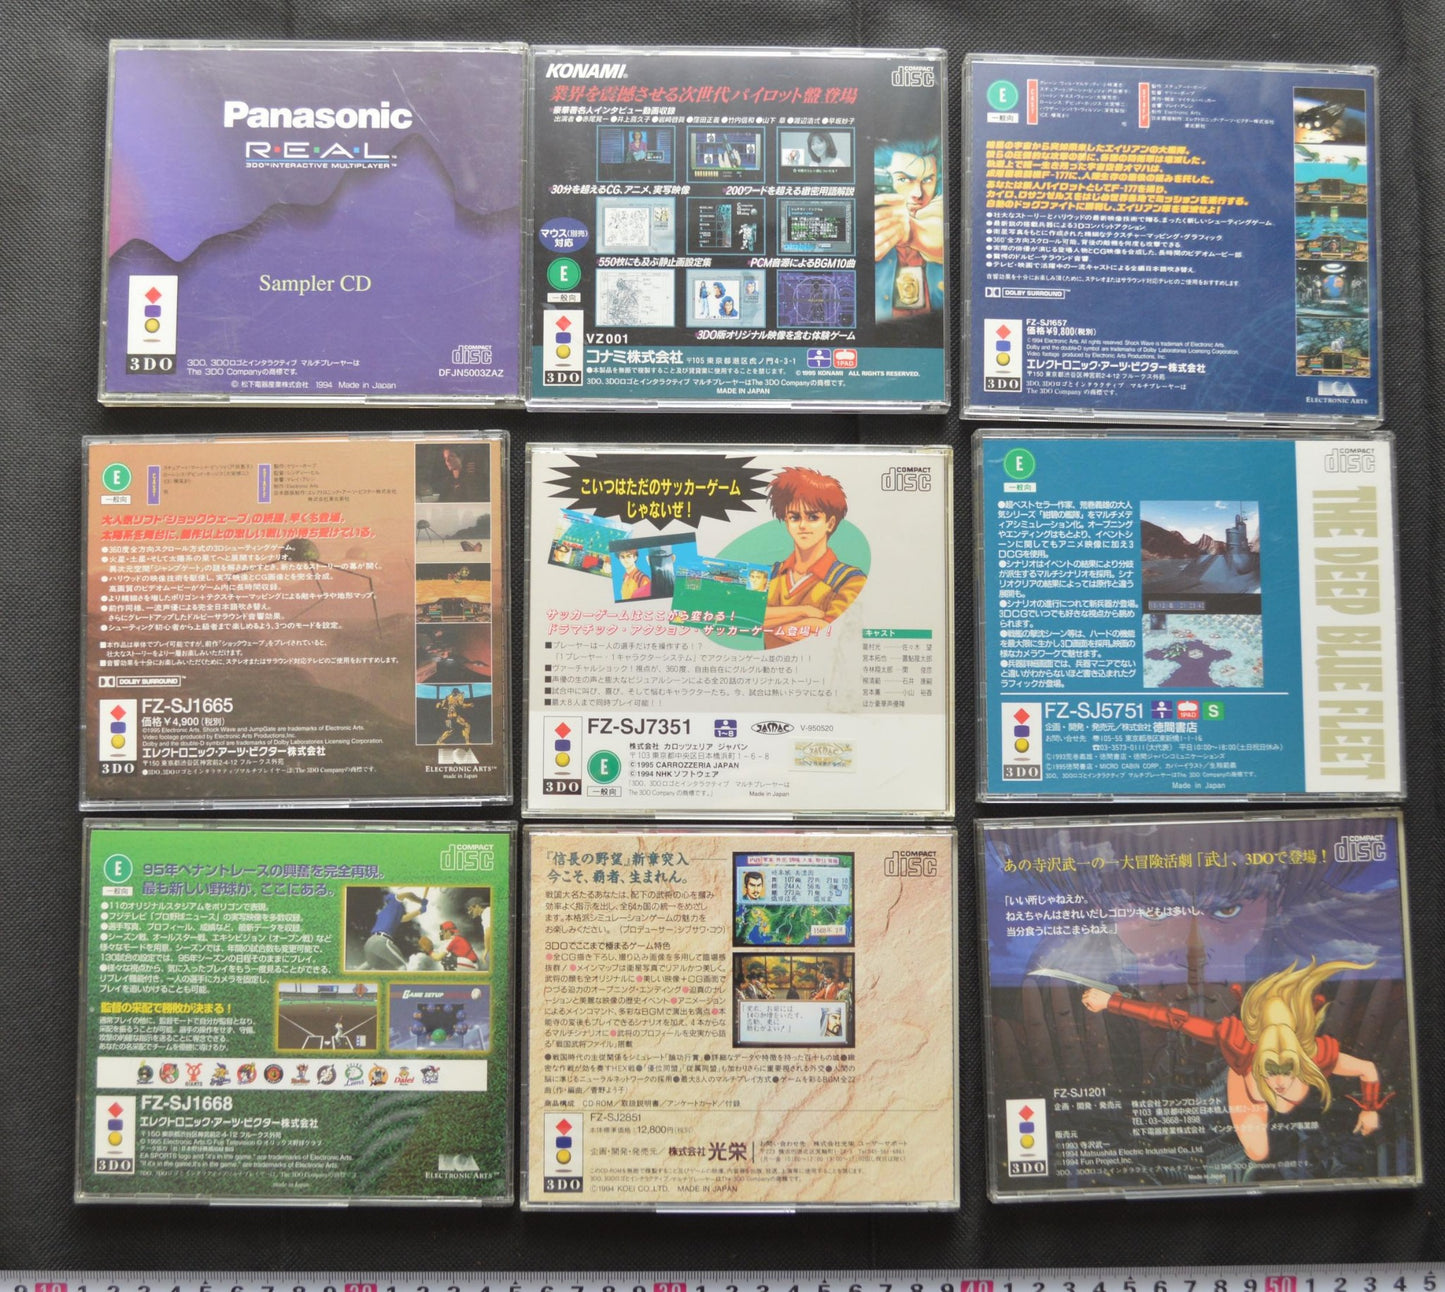 Whole sale Lots of 3DO 3.D.O. Games 9-PCS set-f1108- – Hakushin 